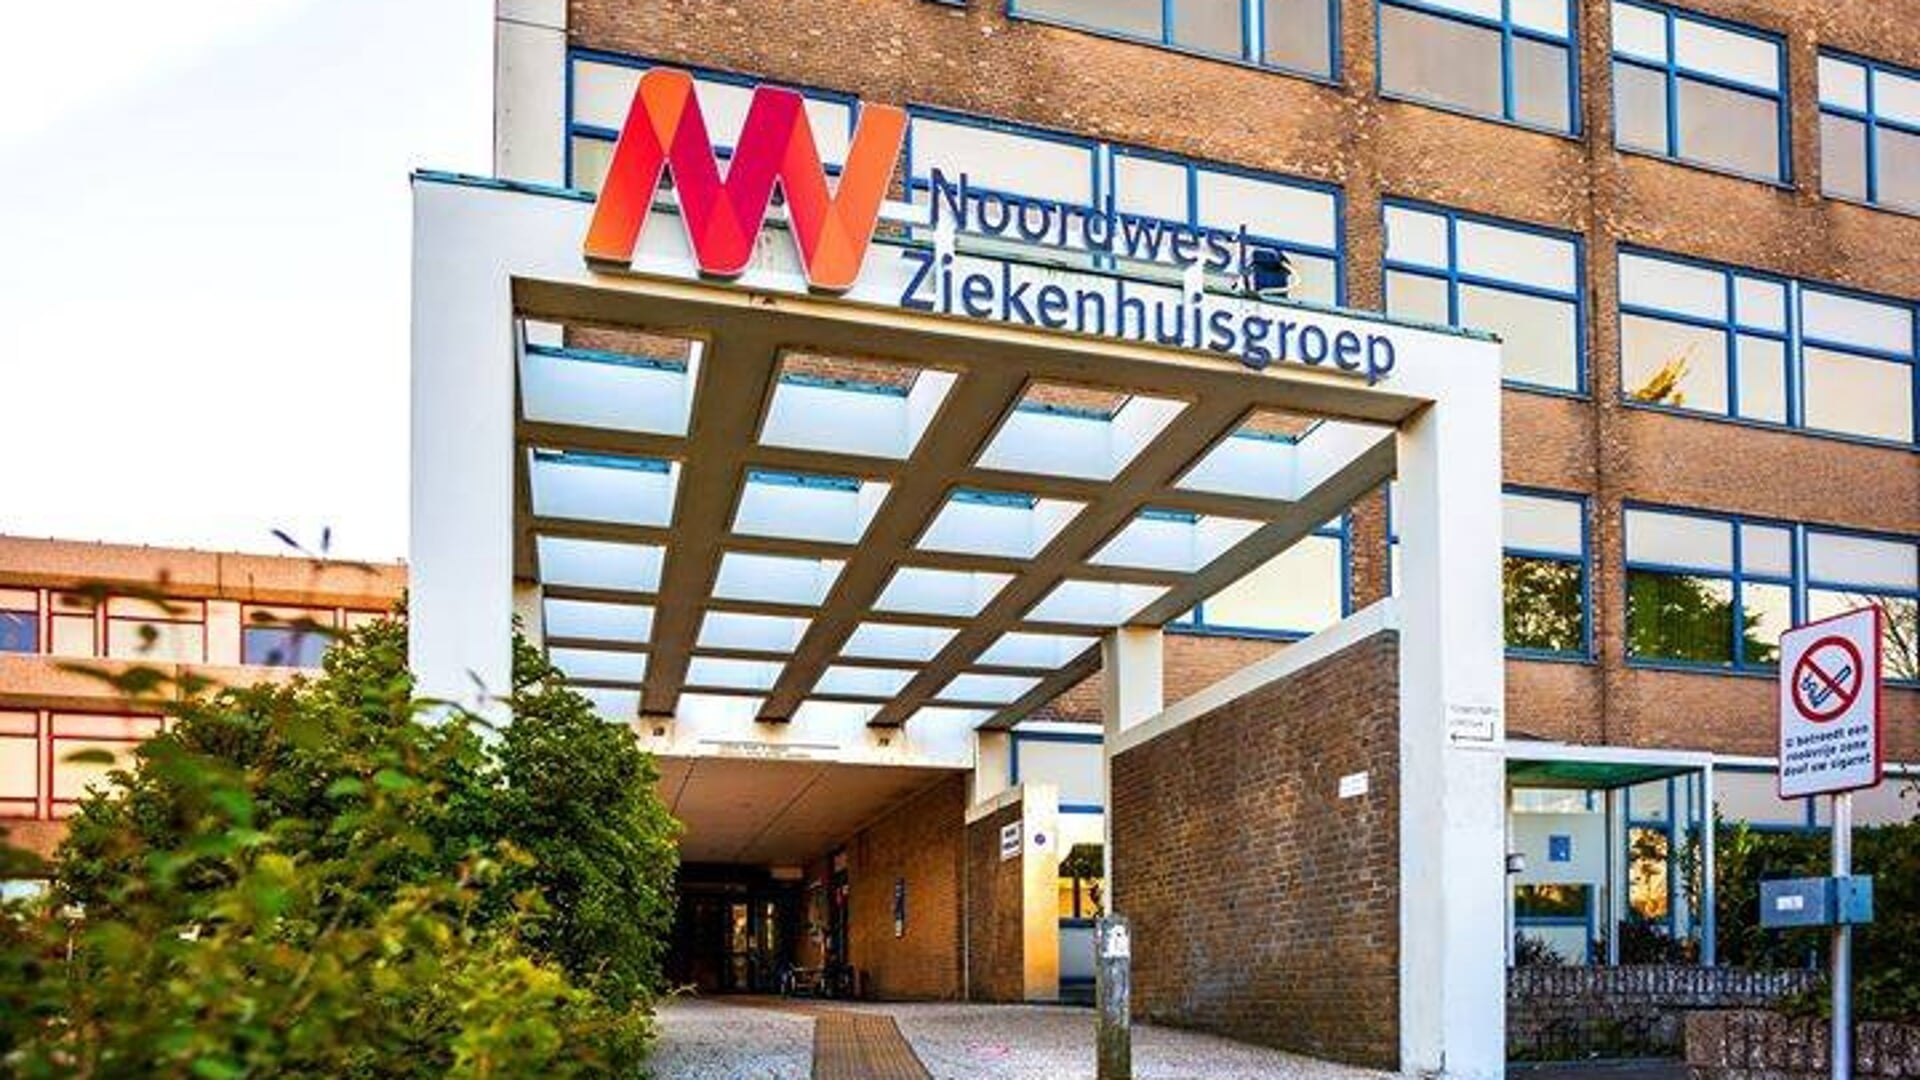 ‘Niercafé’ in Noordwest Ziekenhuisgroep Alkmaar.